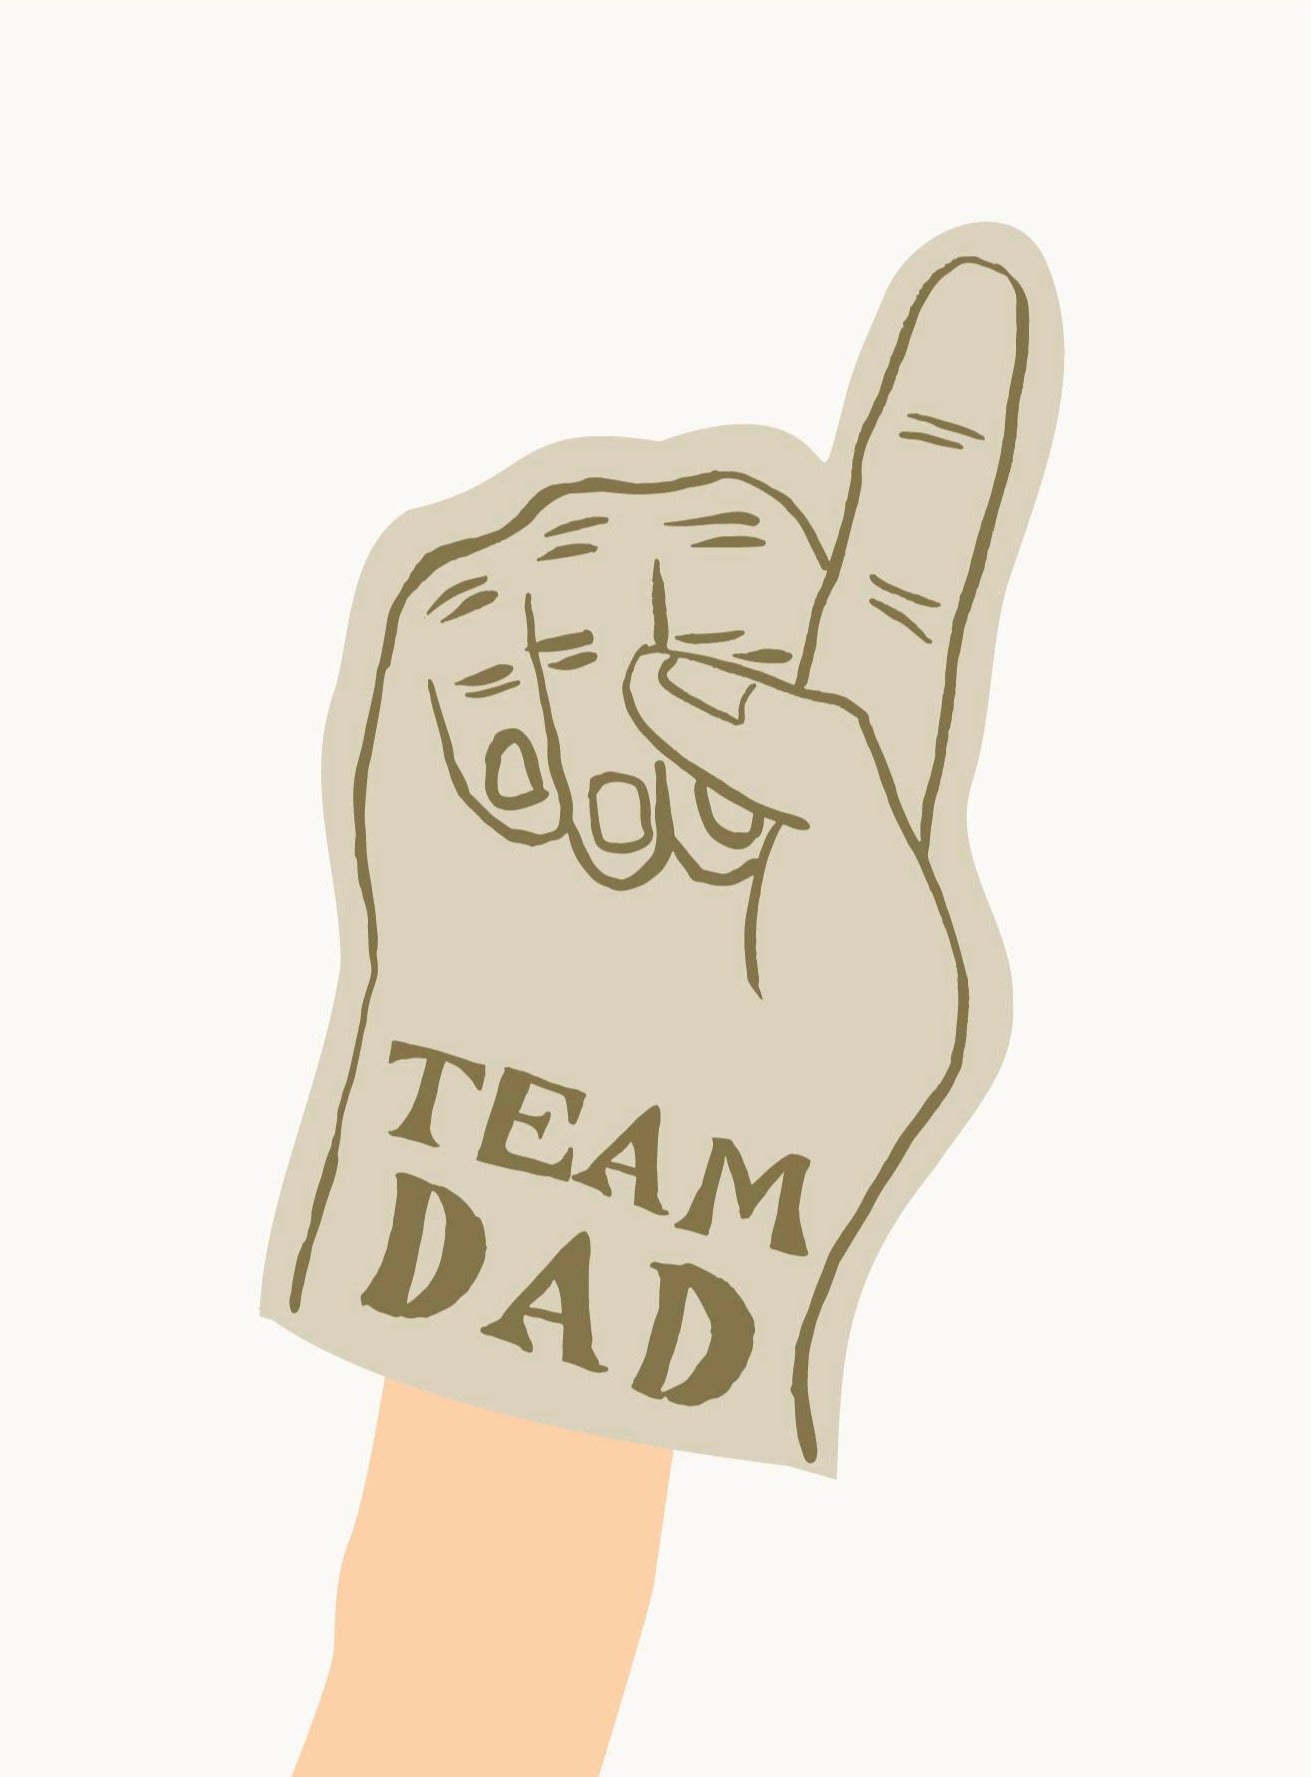 'Team Dad'